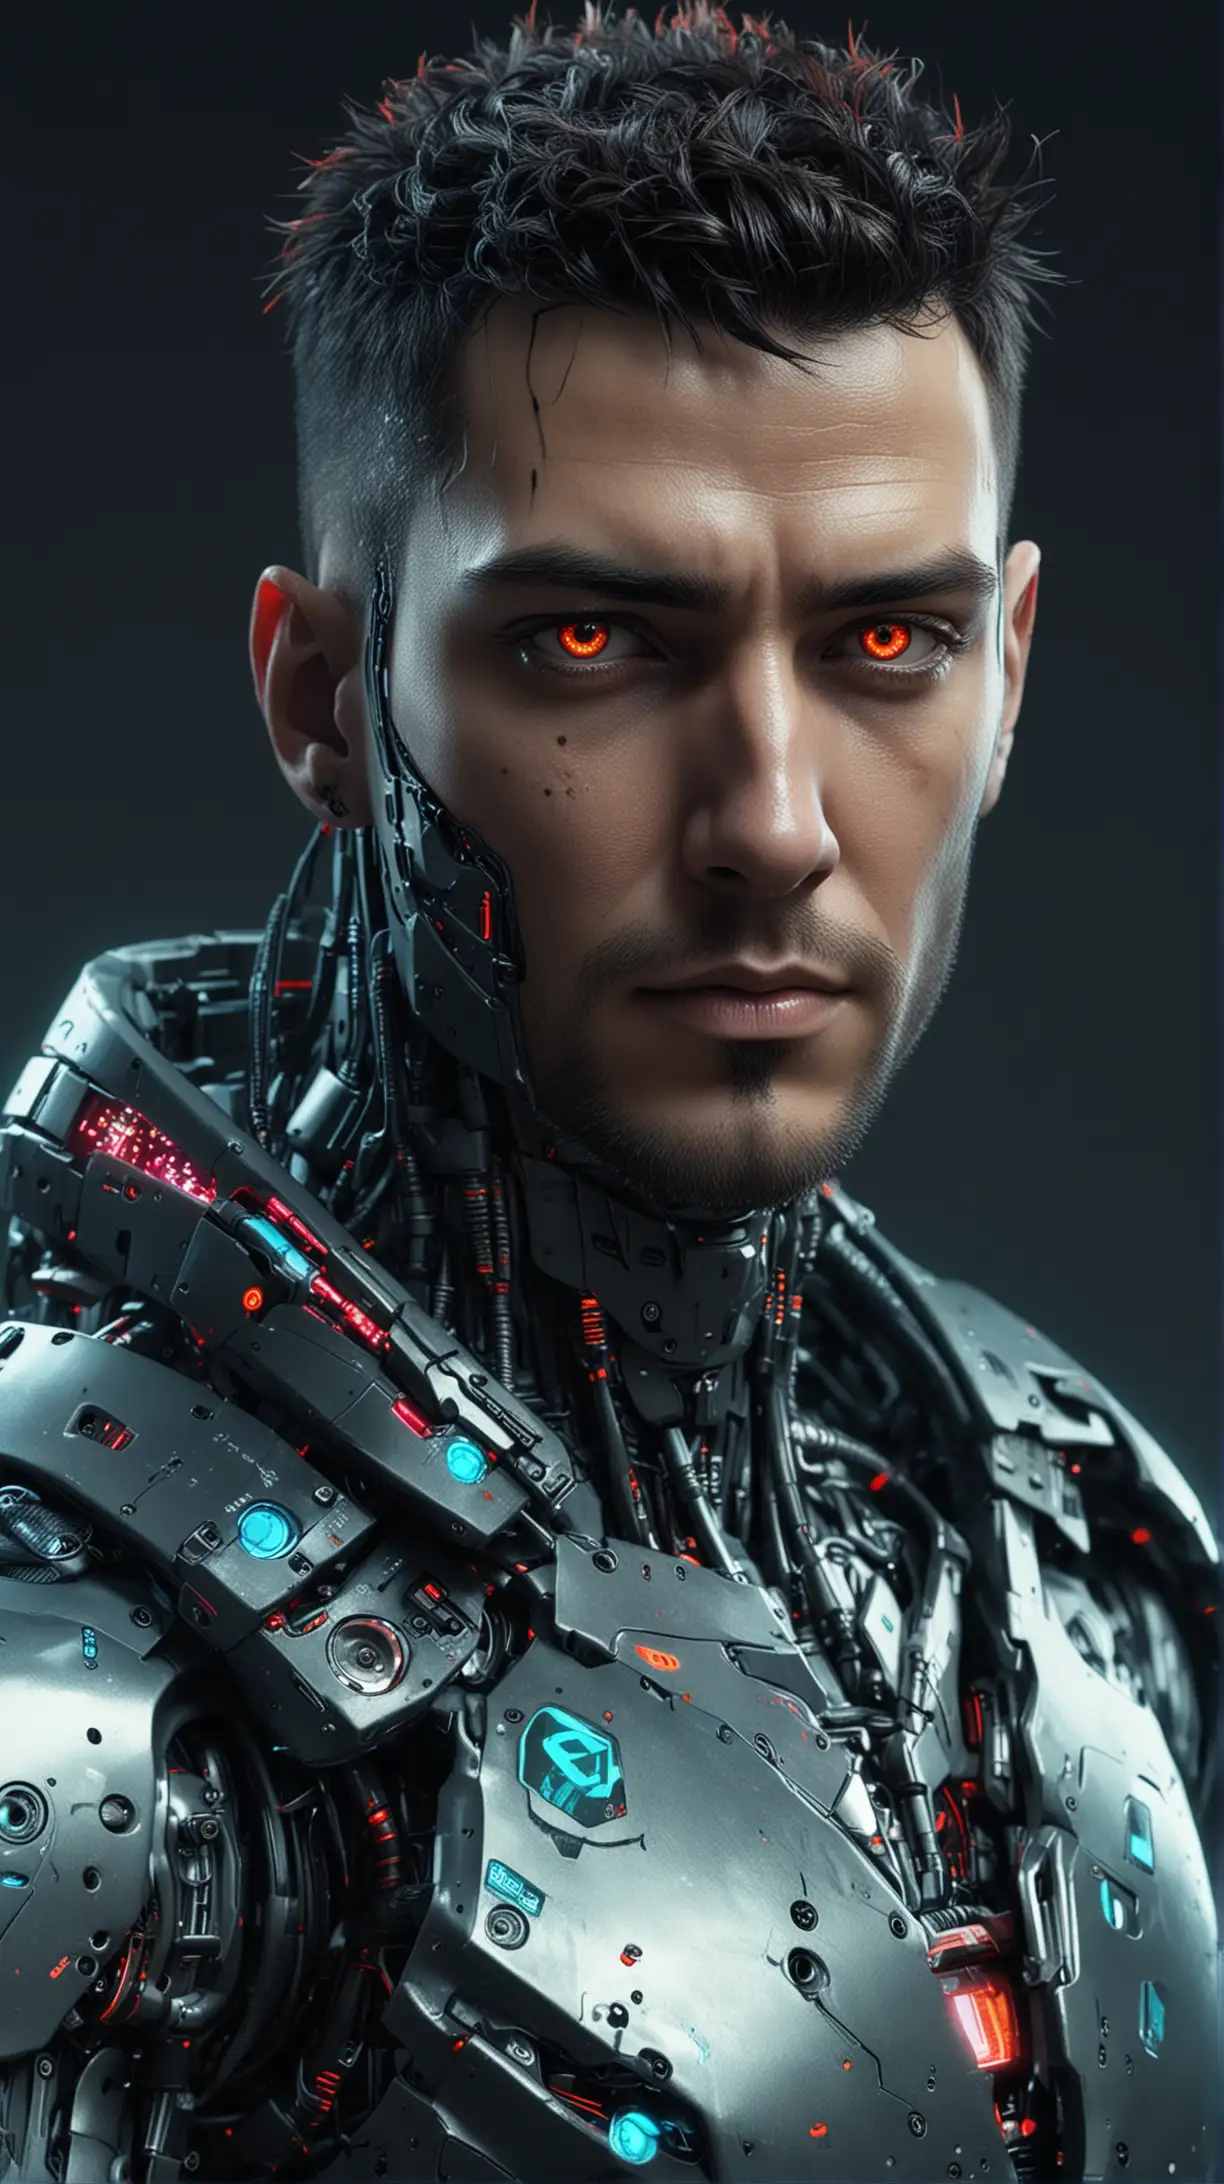 Futuristic Cyberpunk Man with Vivid Eset Robot AI Style